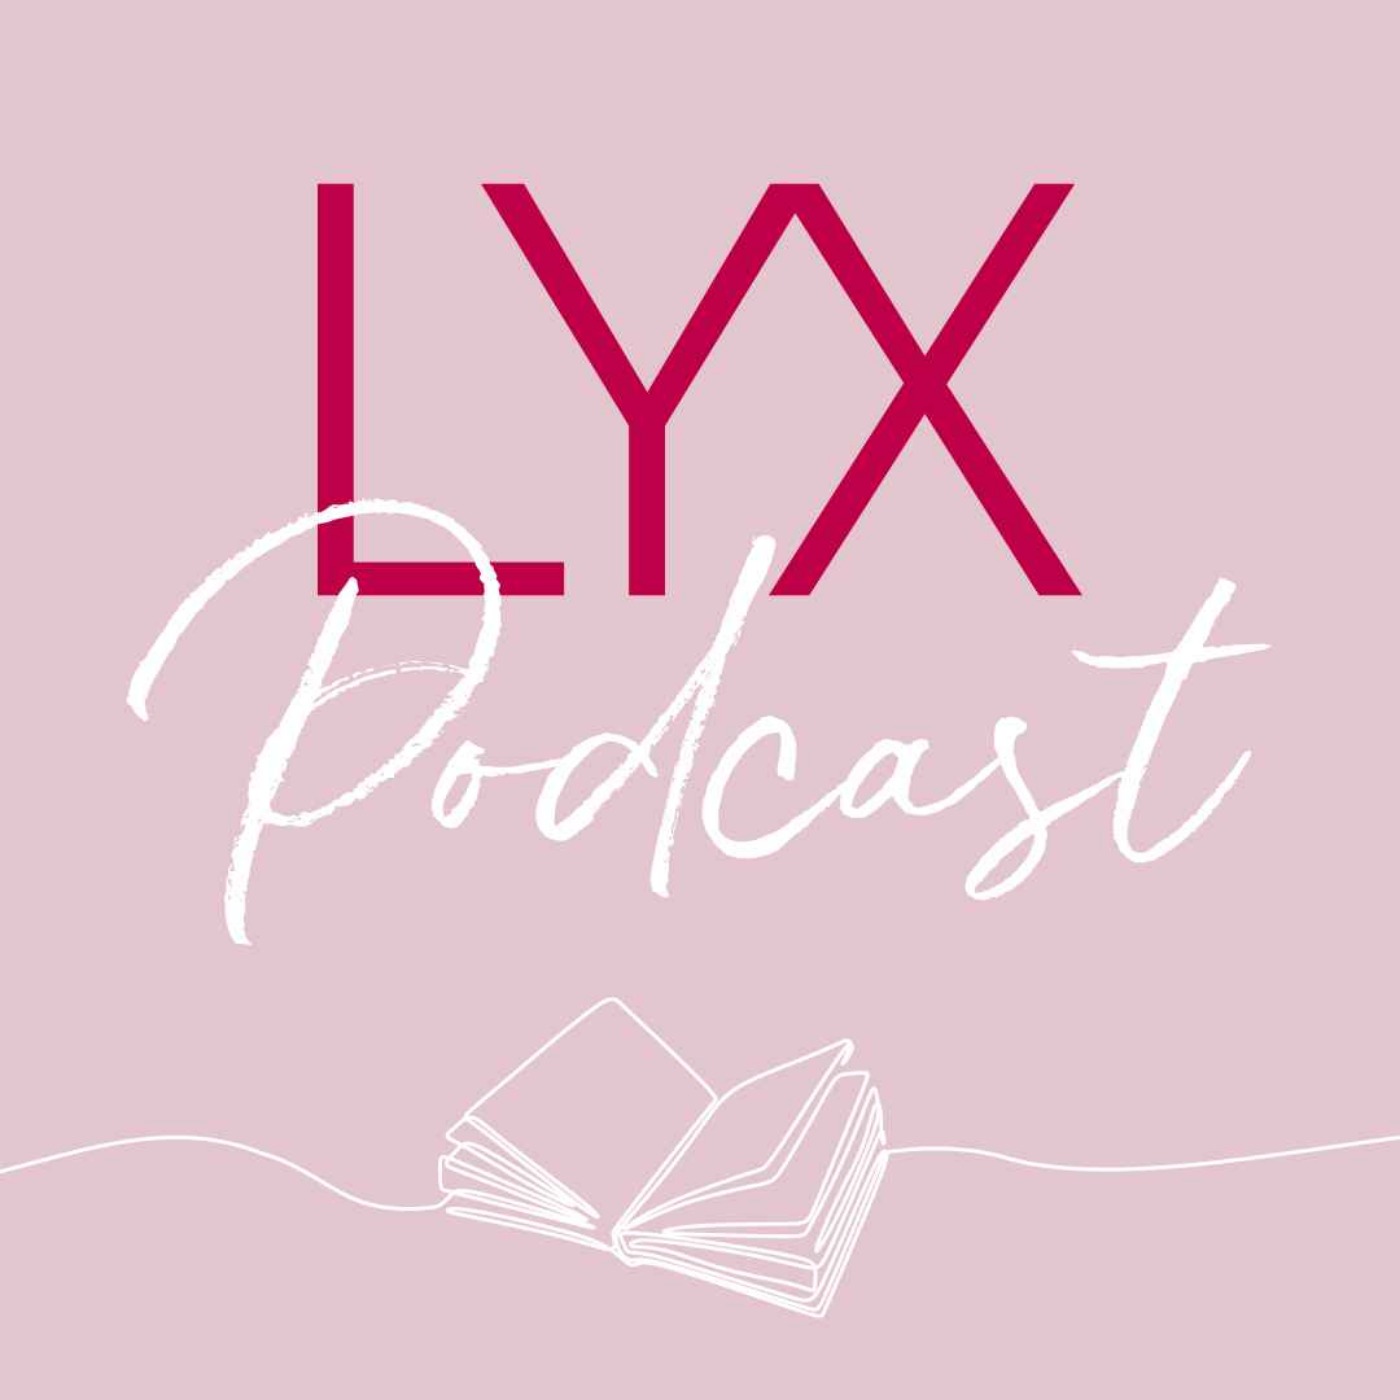 LYX-Podcast | Trailer